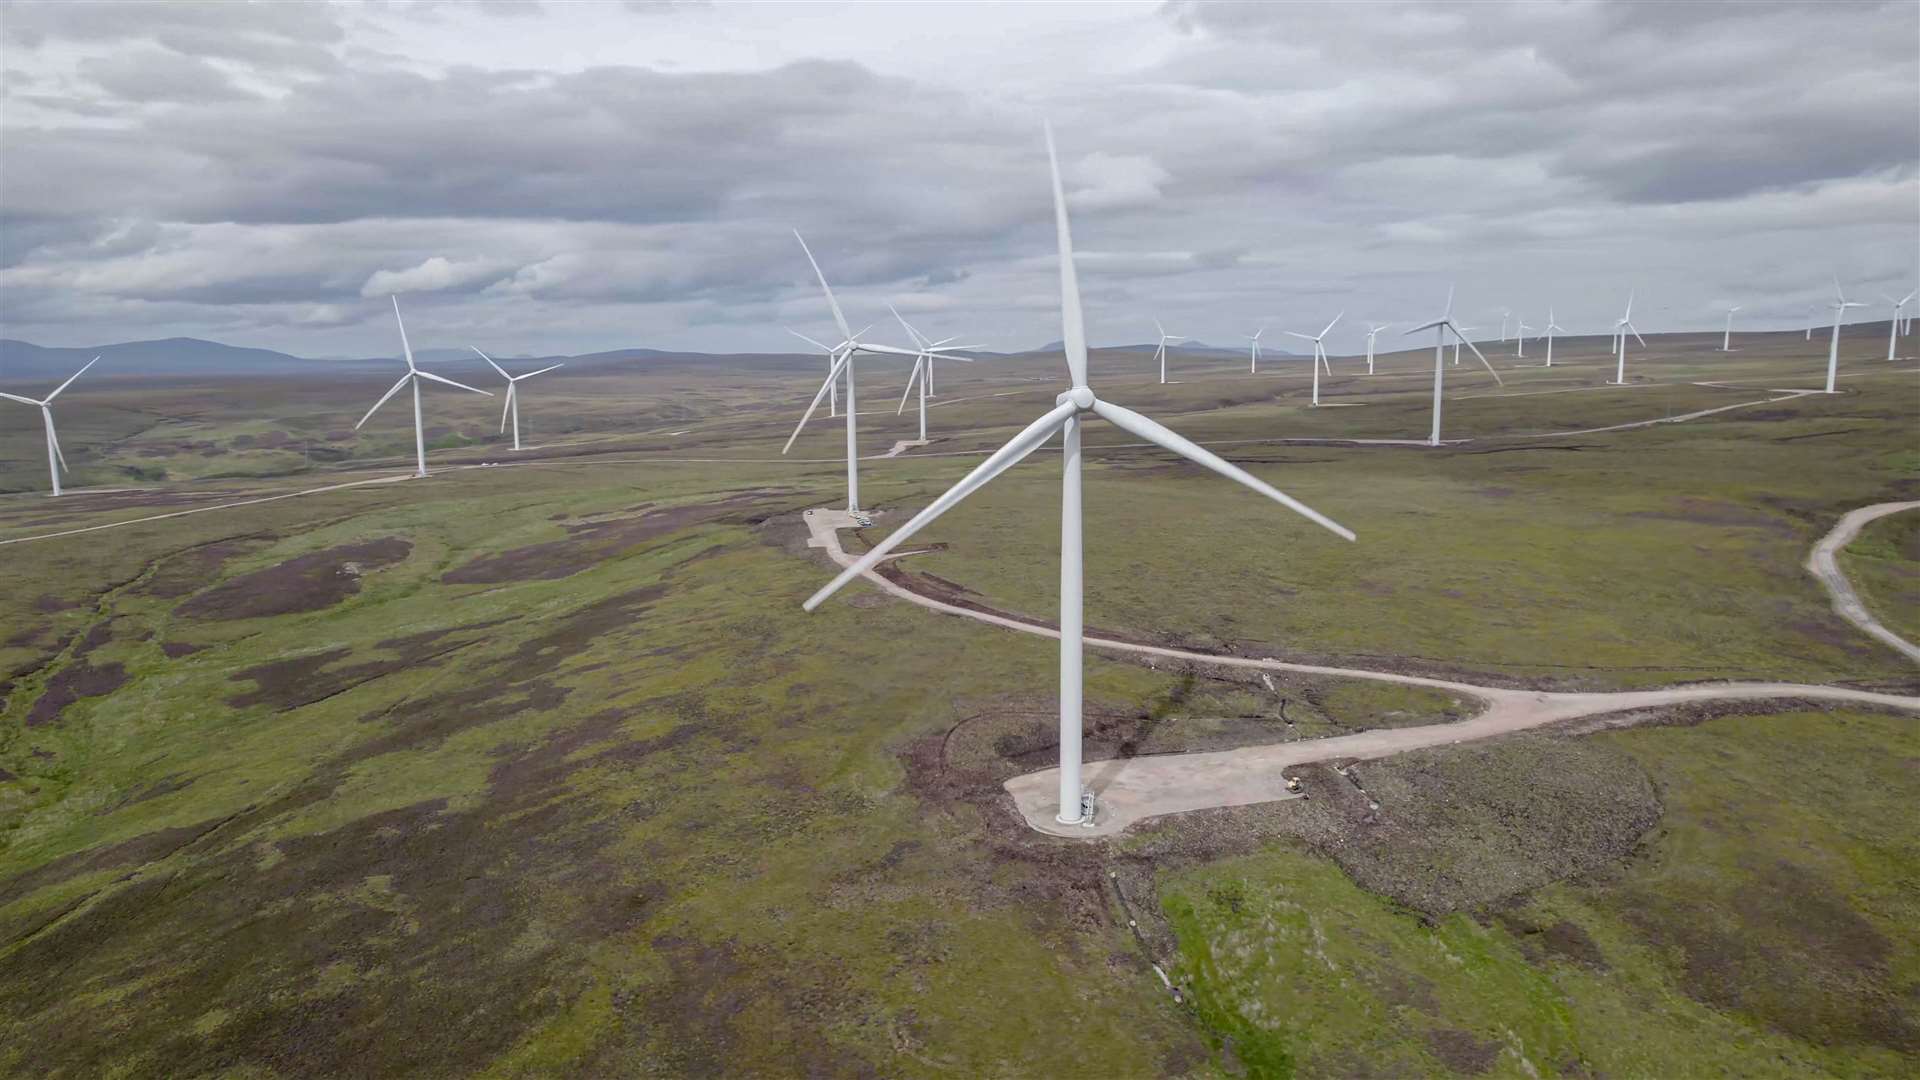 Gordonbush Wind Farm is located in Strath Brora.